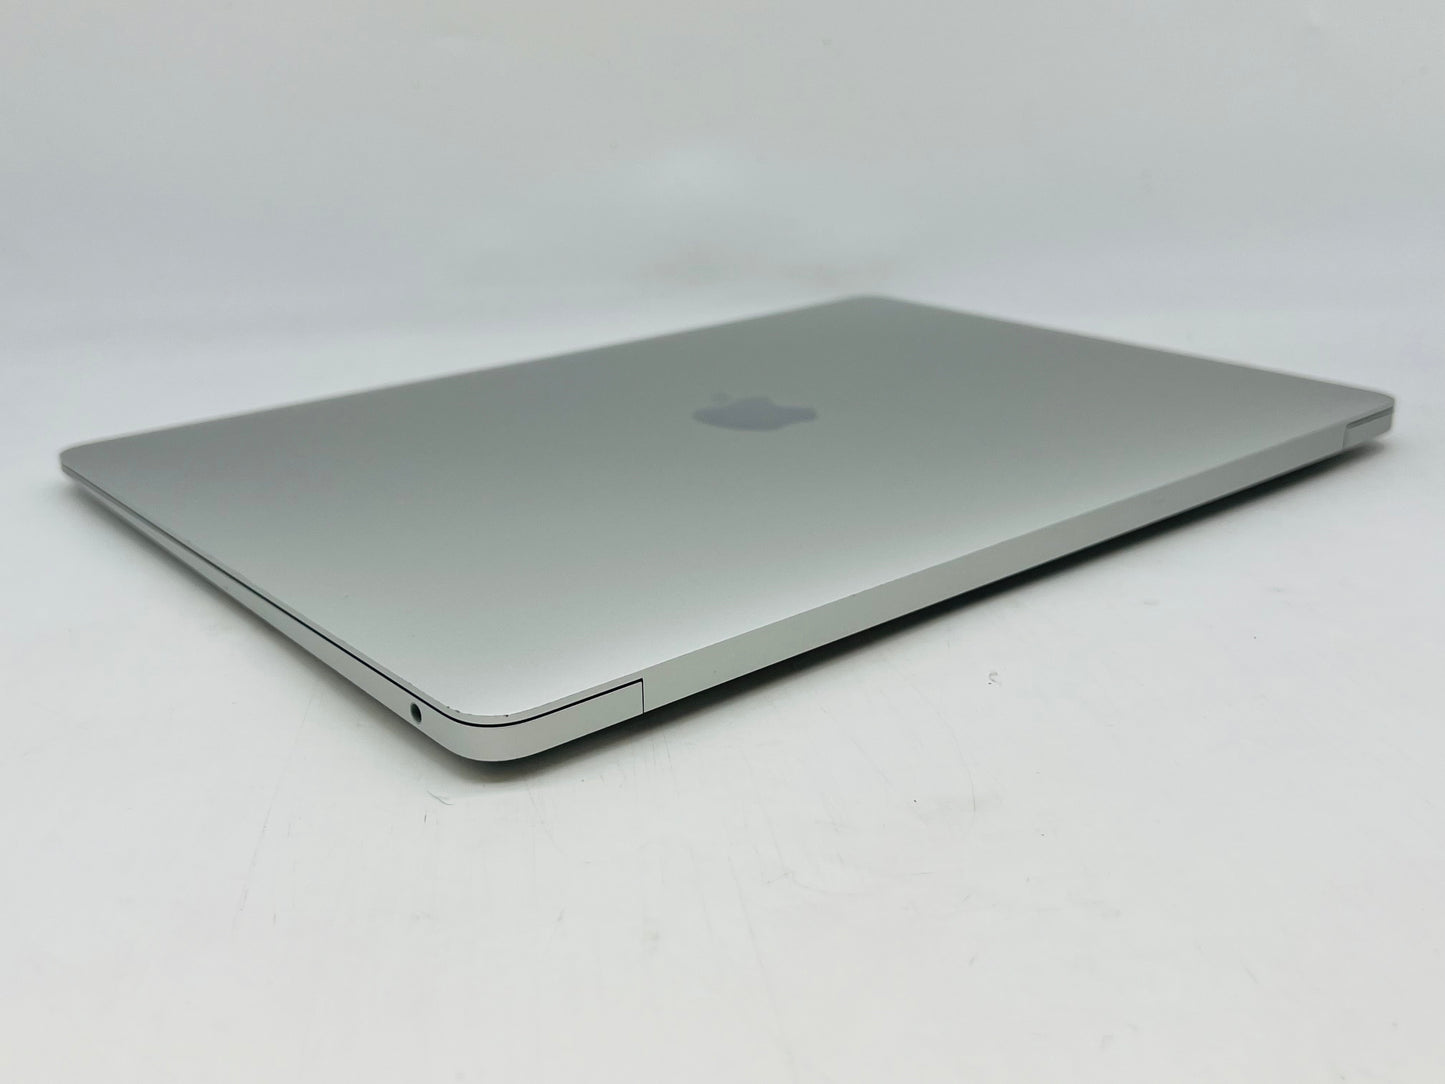 Apple 2020 MacBook Air M1 3.2GHz (8-Core GPU) 16GB RAM 2TB SSD - Very good